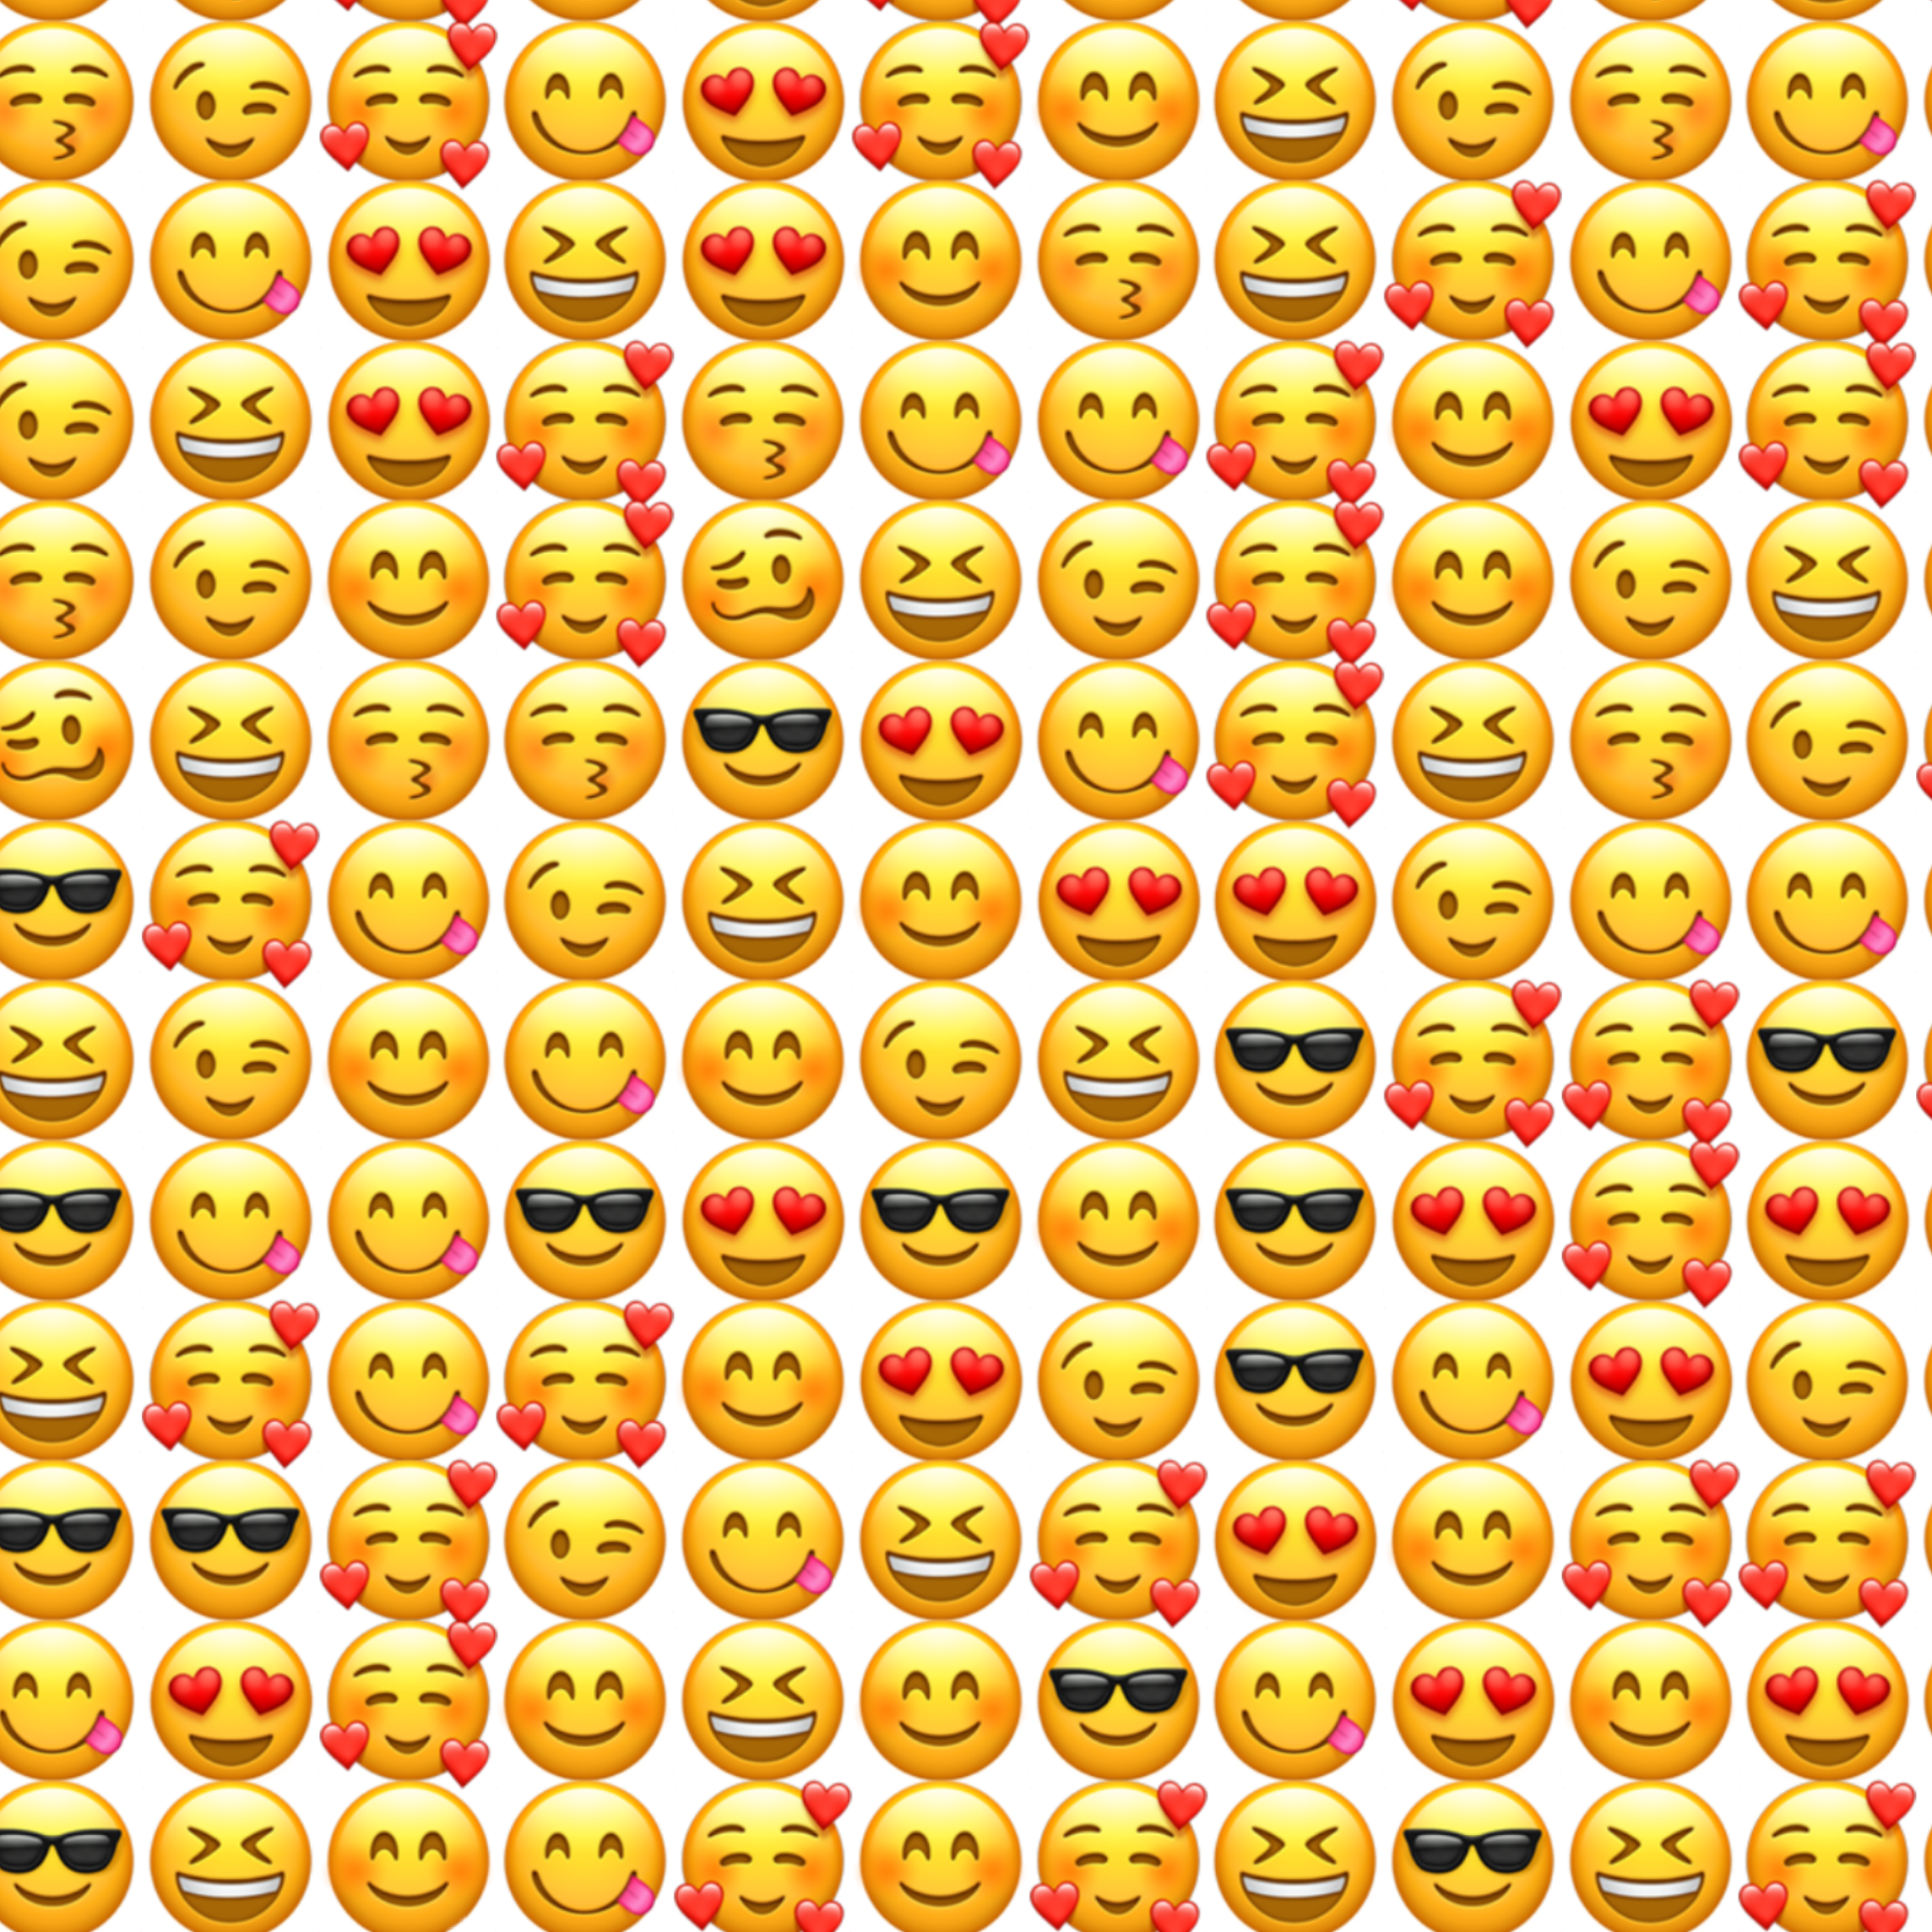 Emoji channel. ЭМОДЖИ. Фон эмодзи. Золотые эмодзи. Фон ЭМОДЖИ для блокнота.